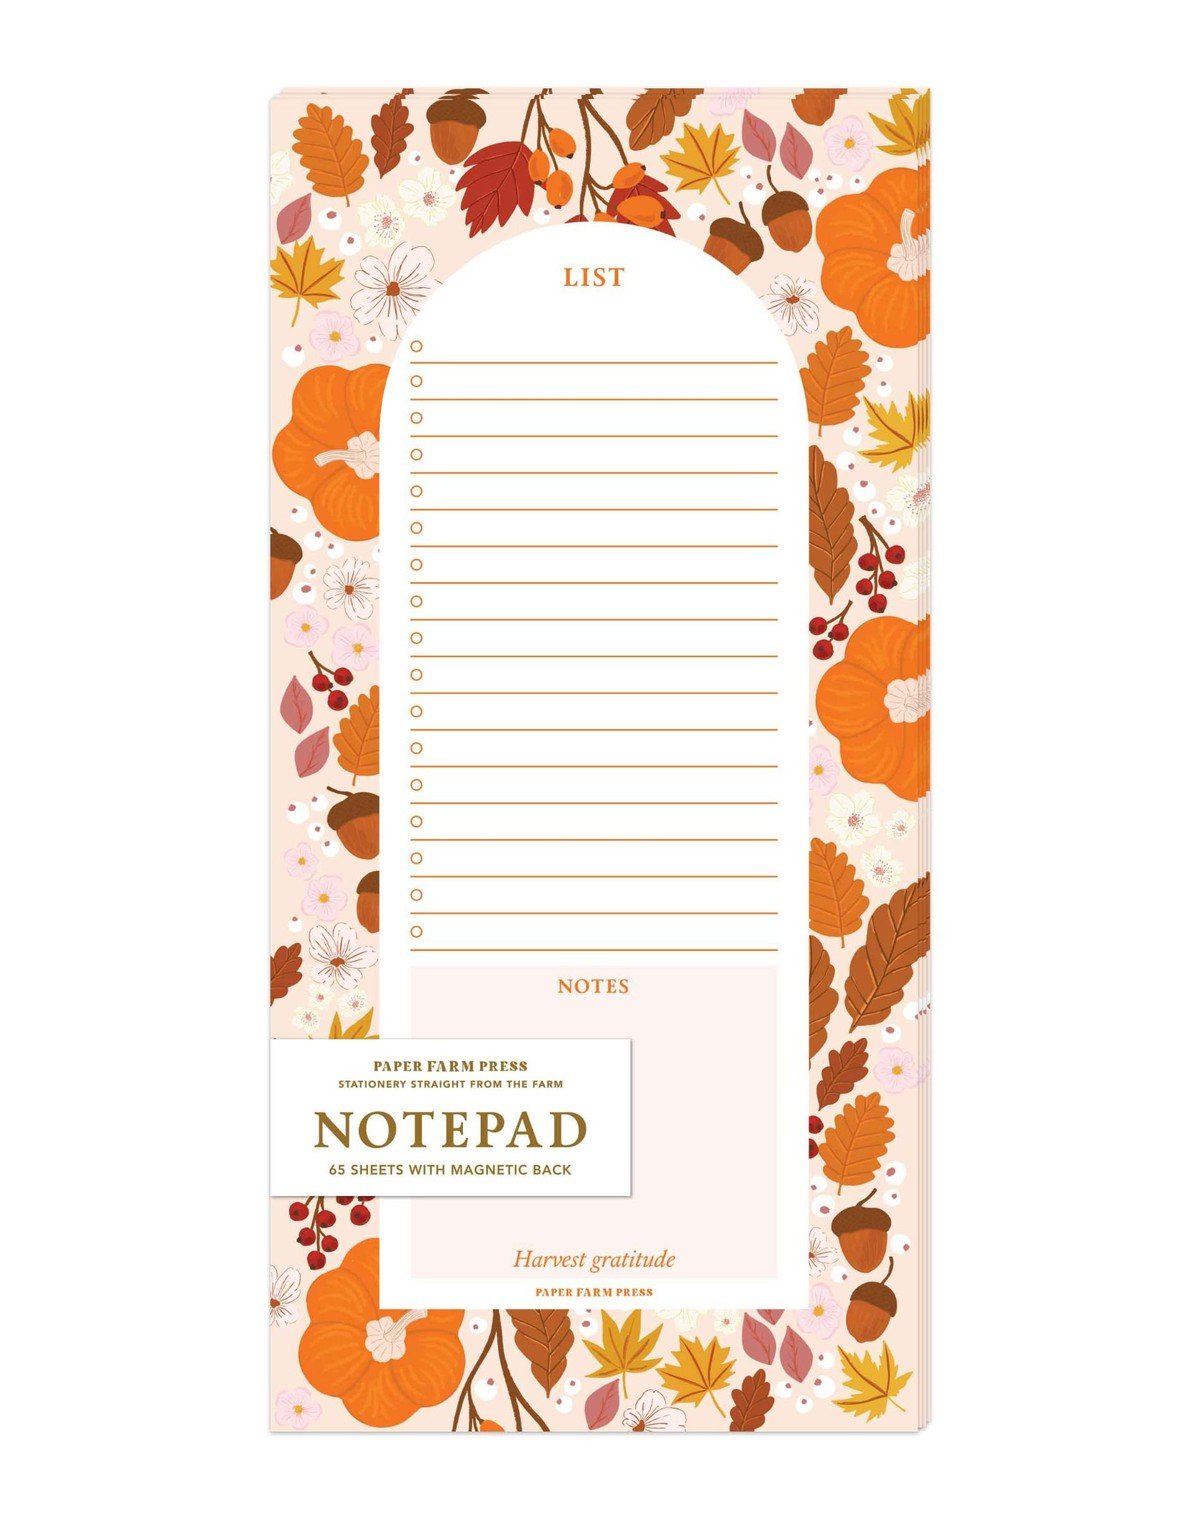 Pumpkin Patch Market List Notepad item